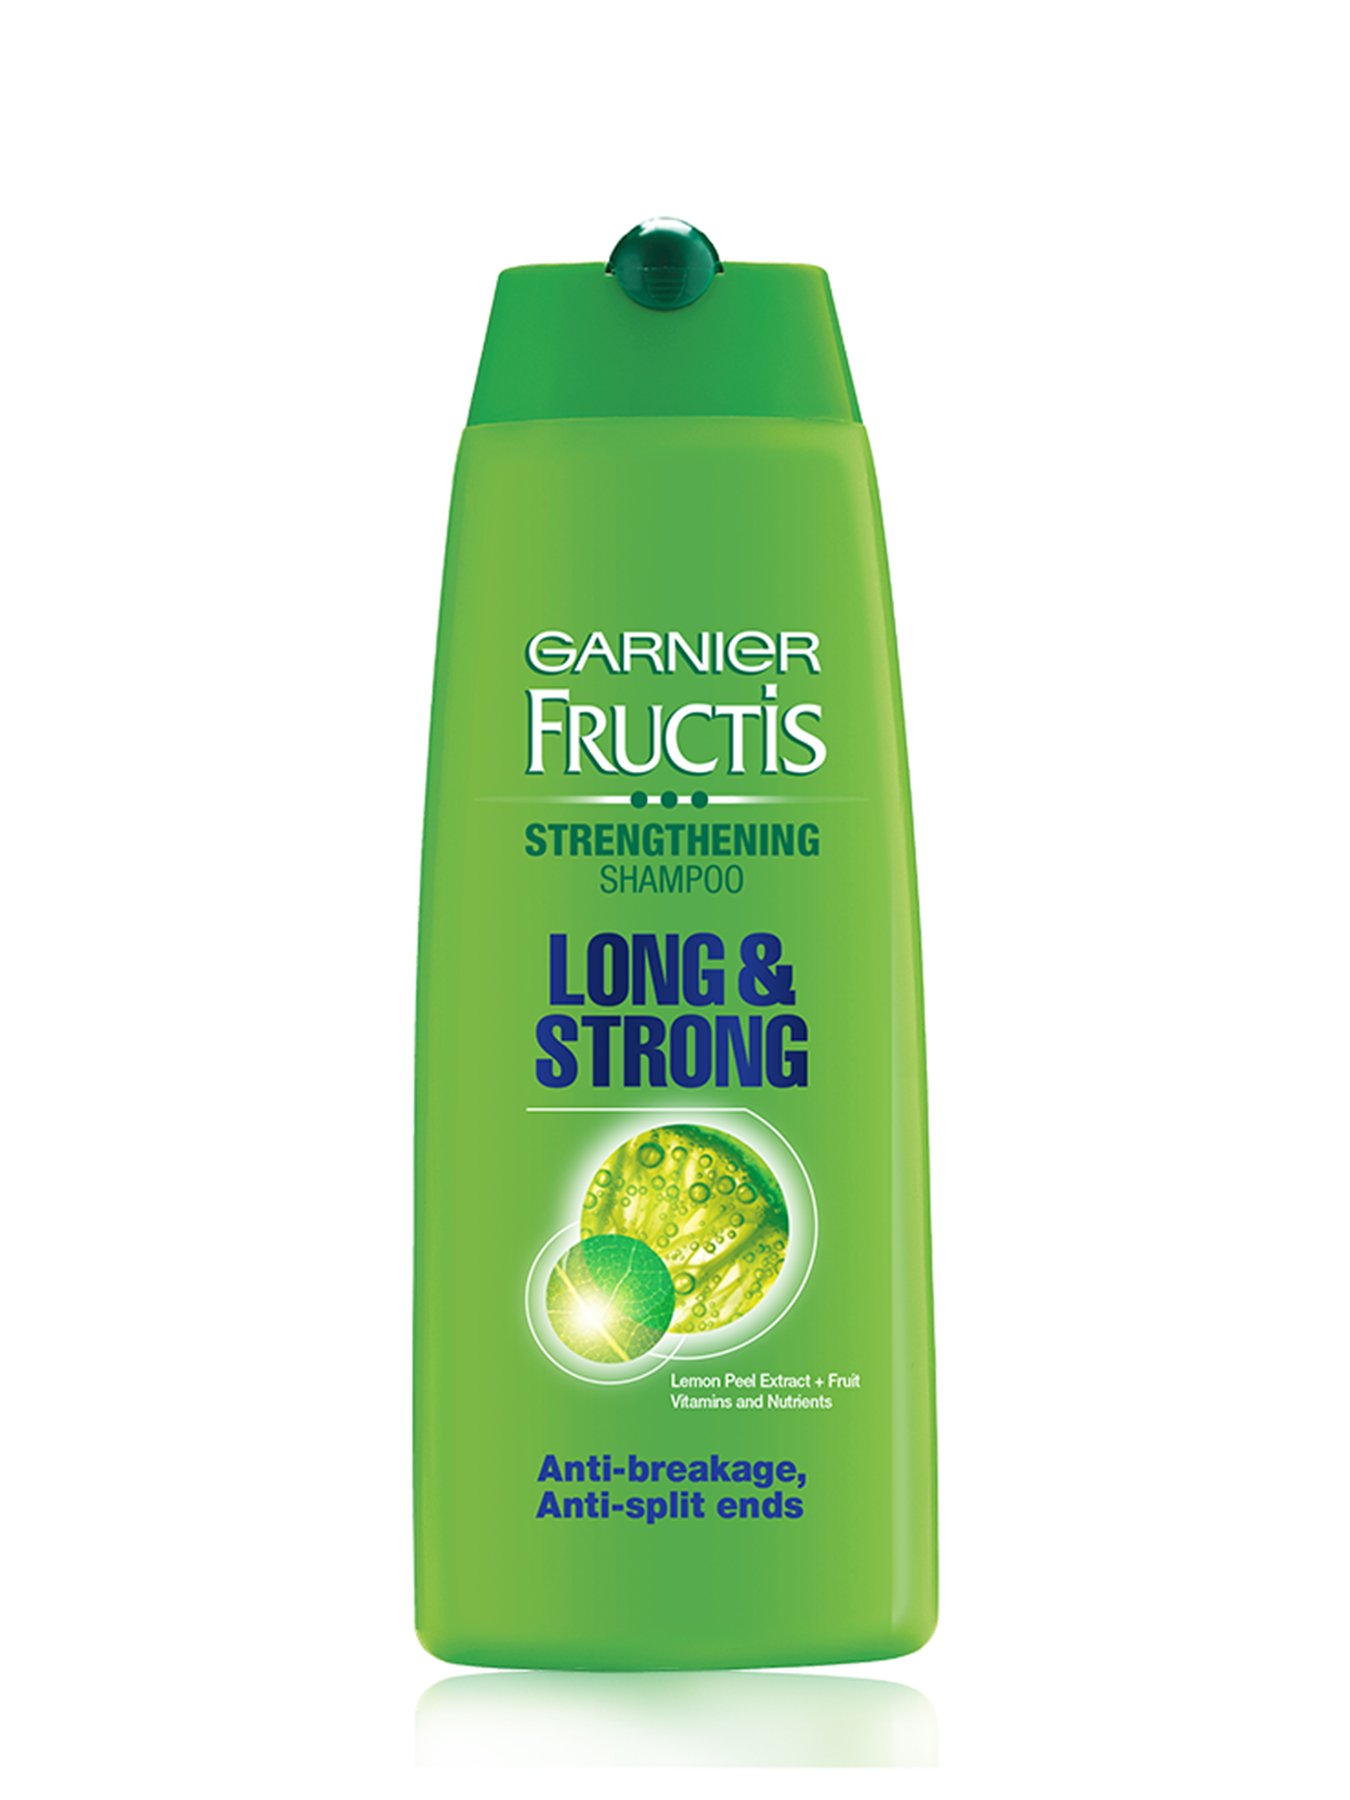 Garnier Fructis Long & Strong Shampoo 340ml